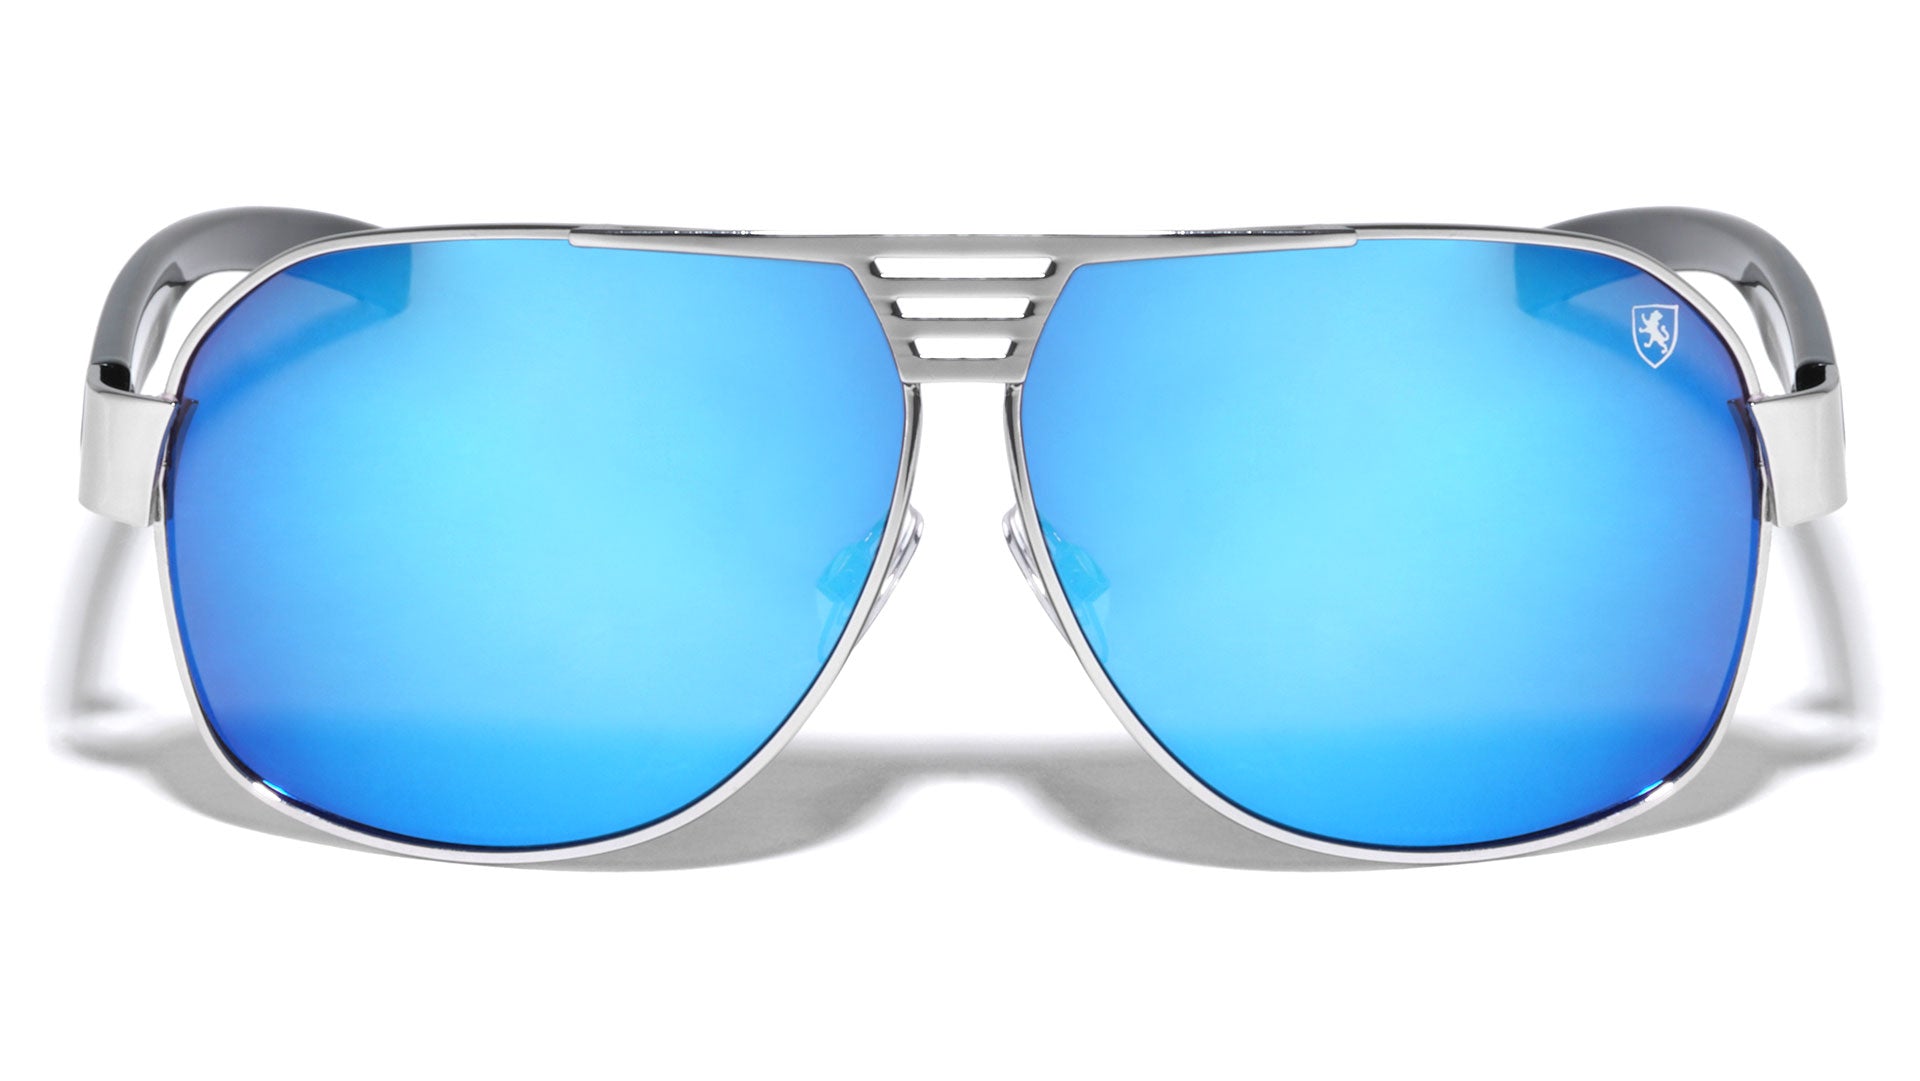 Khan Aviators Wholesale Sunglasses